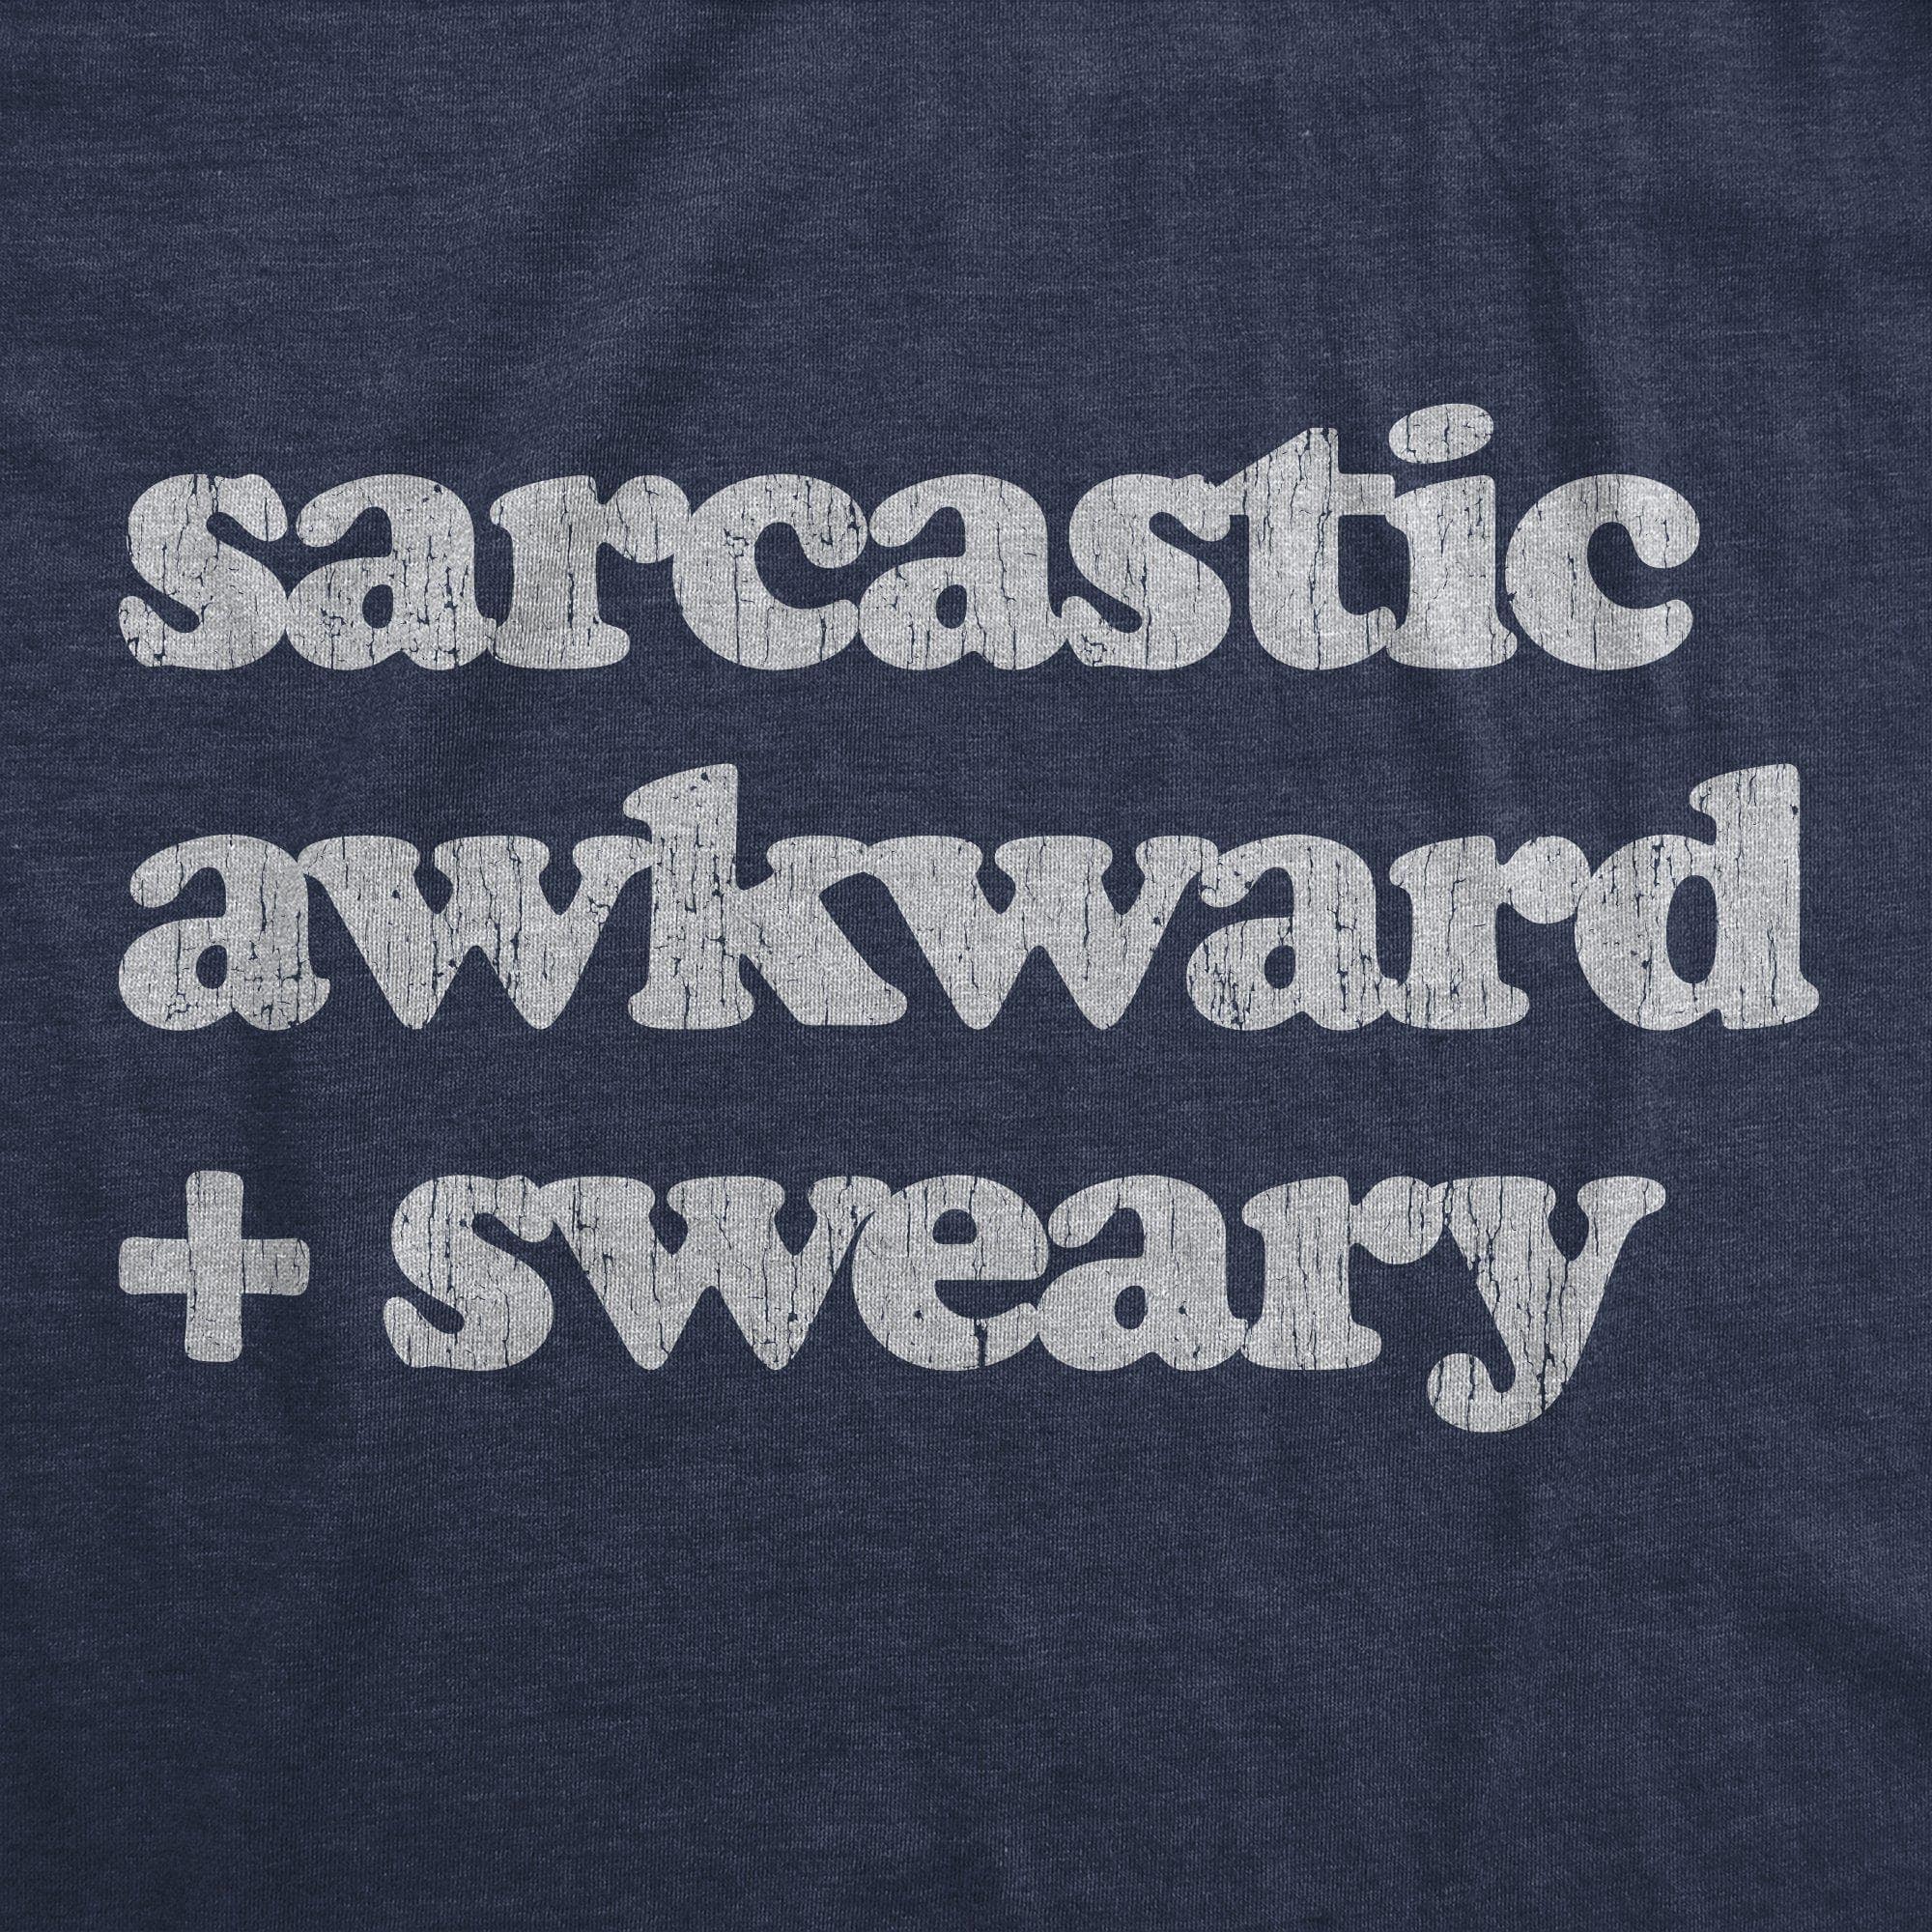 Sarcastic Awkward Sweary Women's Tshirt - Crazy Dog T-Shirts